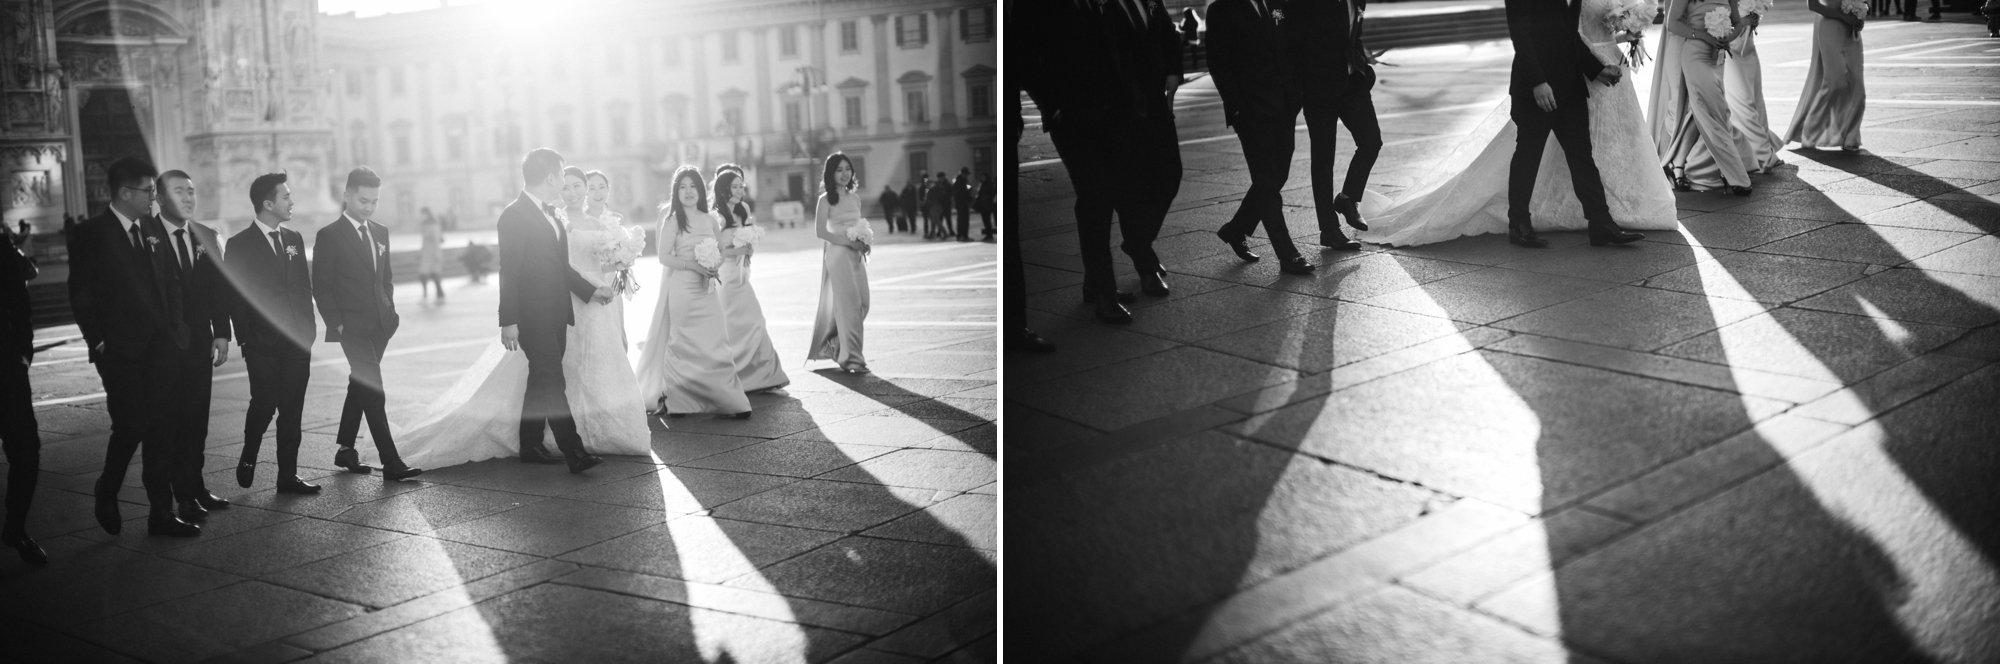 Prawira-Evelyn-Dolomites-Italy-Santre wedding-Yefta Gunawan-Jeriko MUA-Carol Kuntjoro Photography-26.jpg